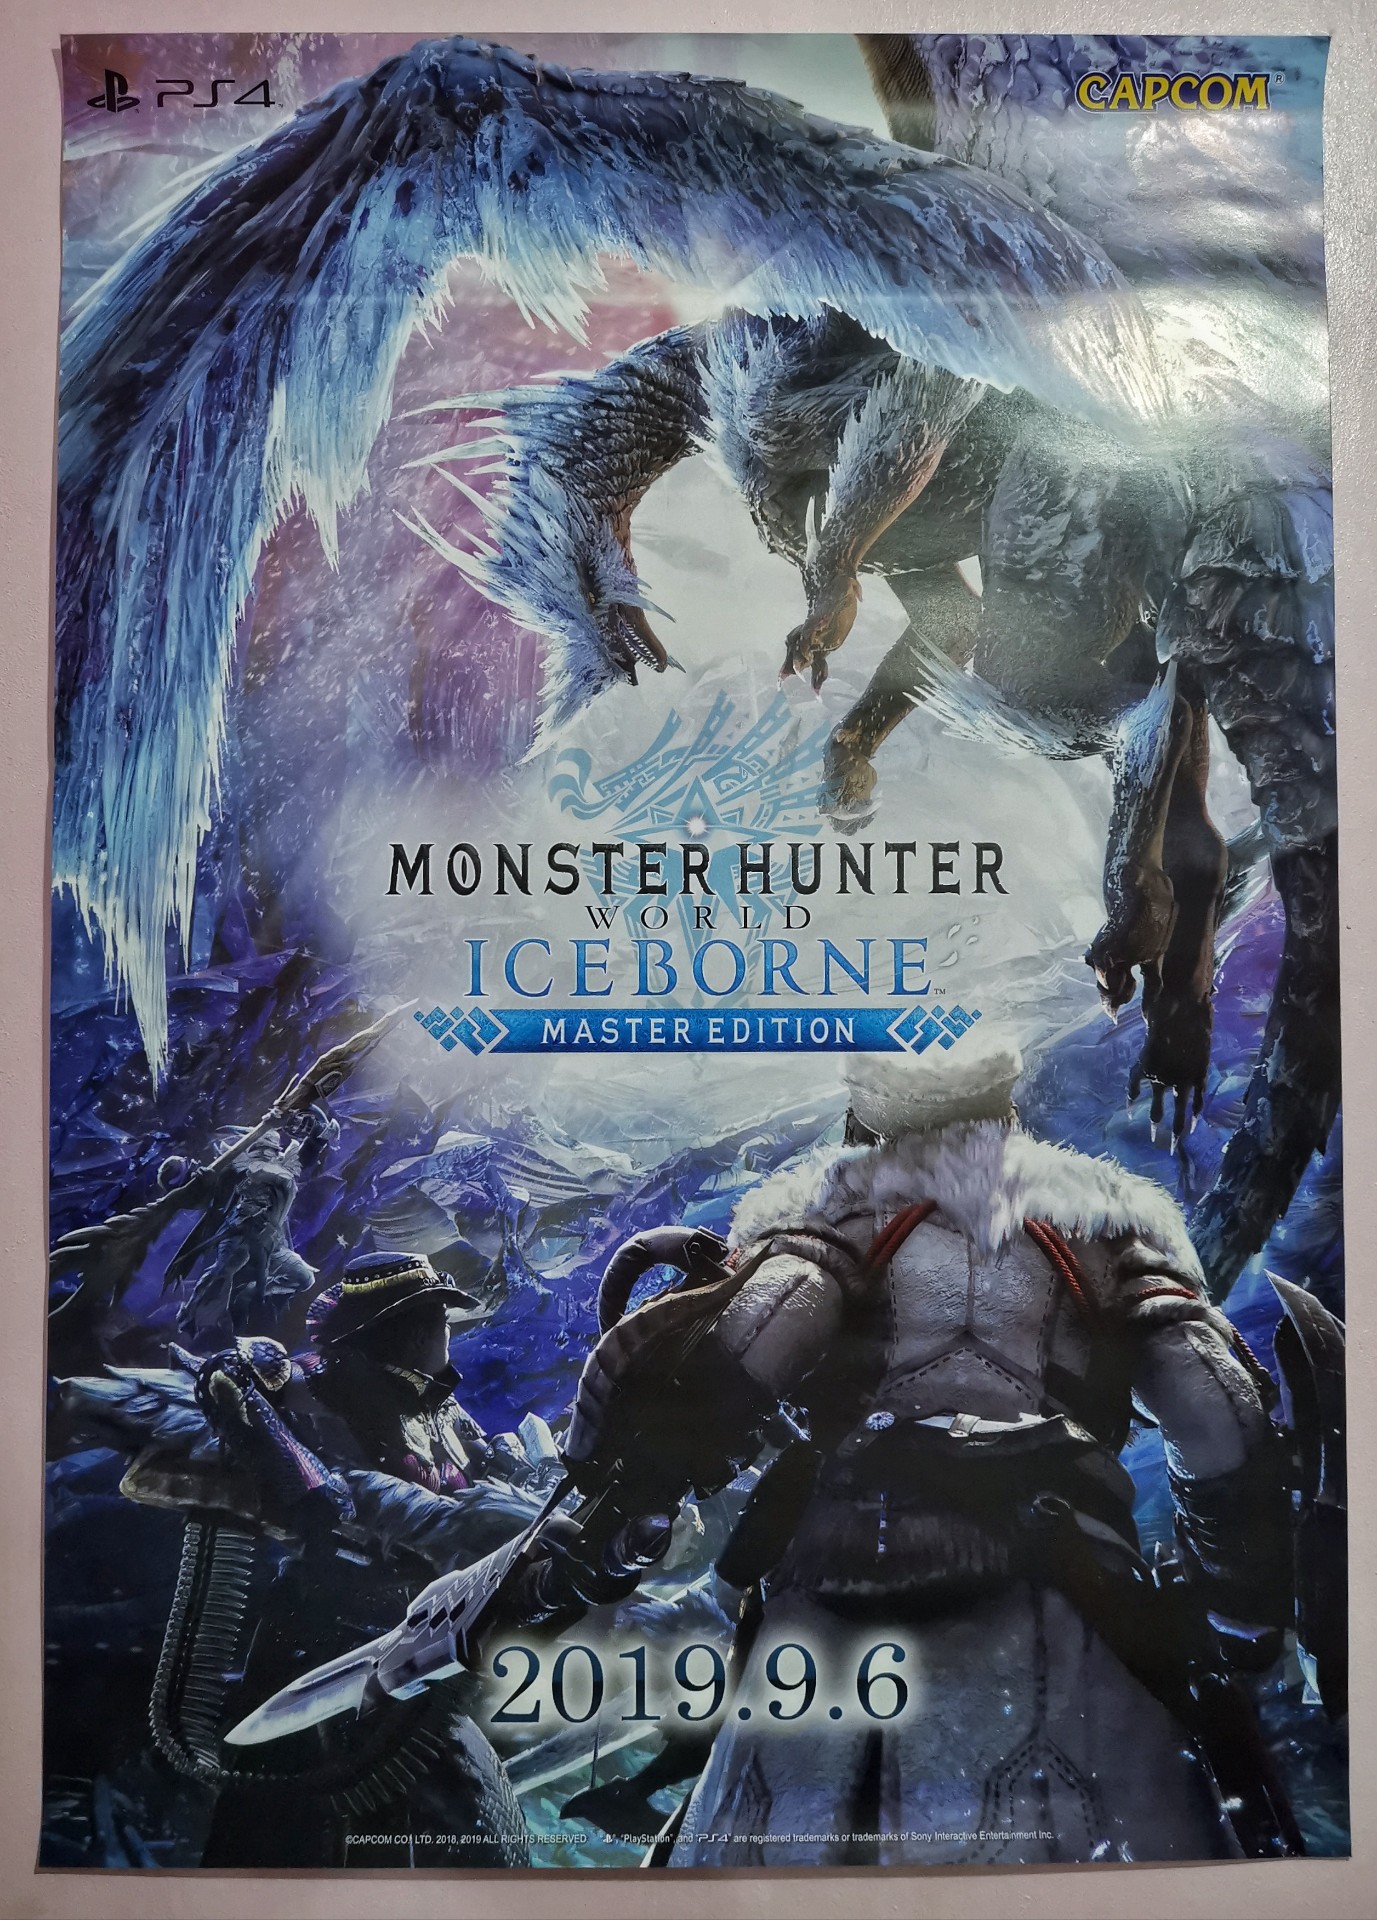 Capcom — Monster Hunter World: Iceborne - VeVe Digital Collectibles